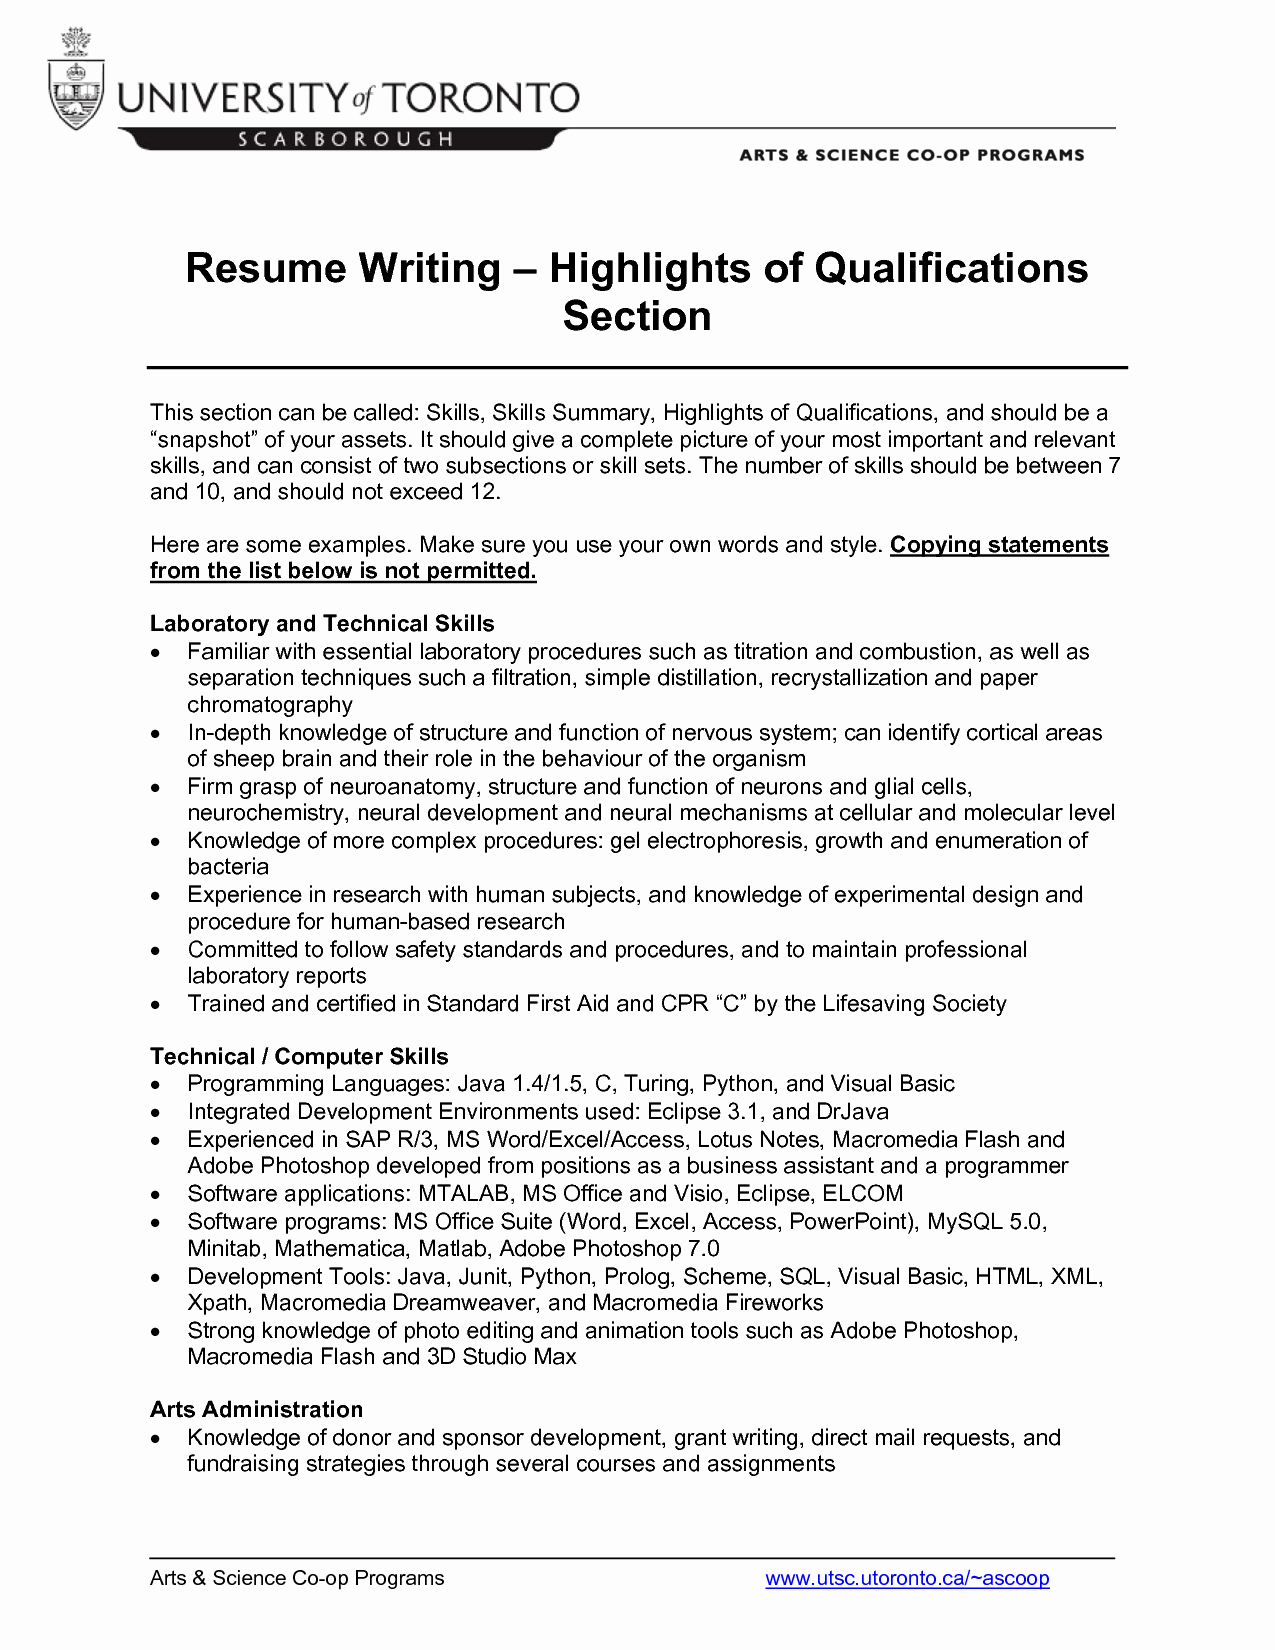 Puter Skills Qualifications Resume